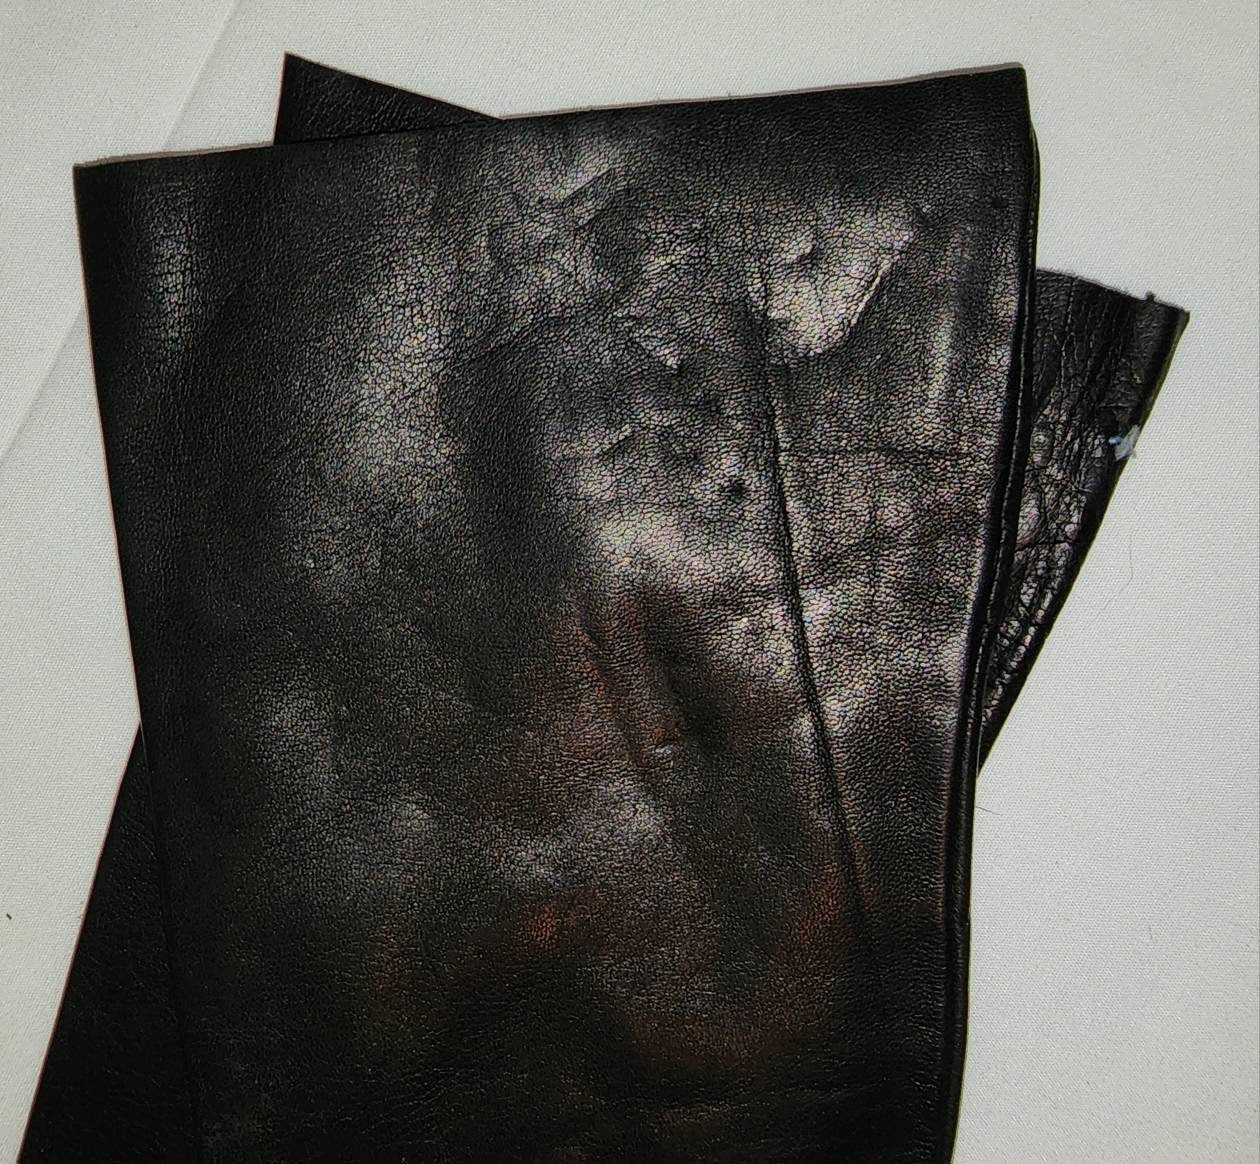 Unworn Vintage Leather Gloves 1950s 60s Long Thin Black Leather Gloves Mid Century Fetish Boho 6 3/4